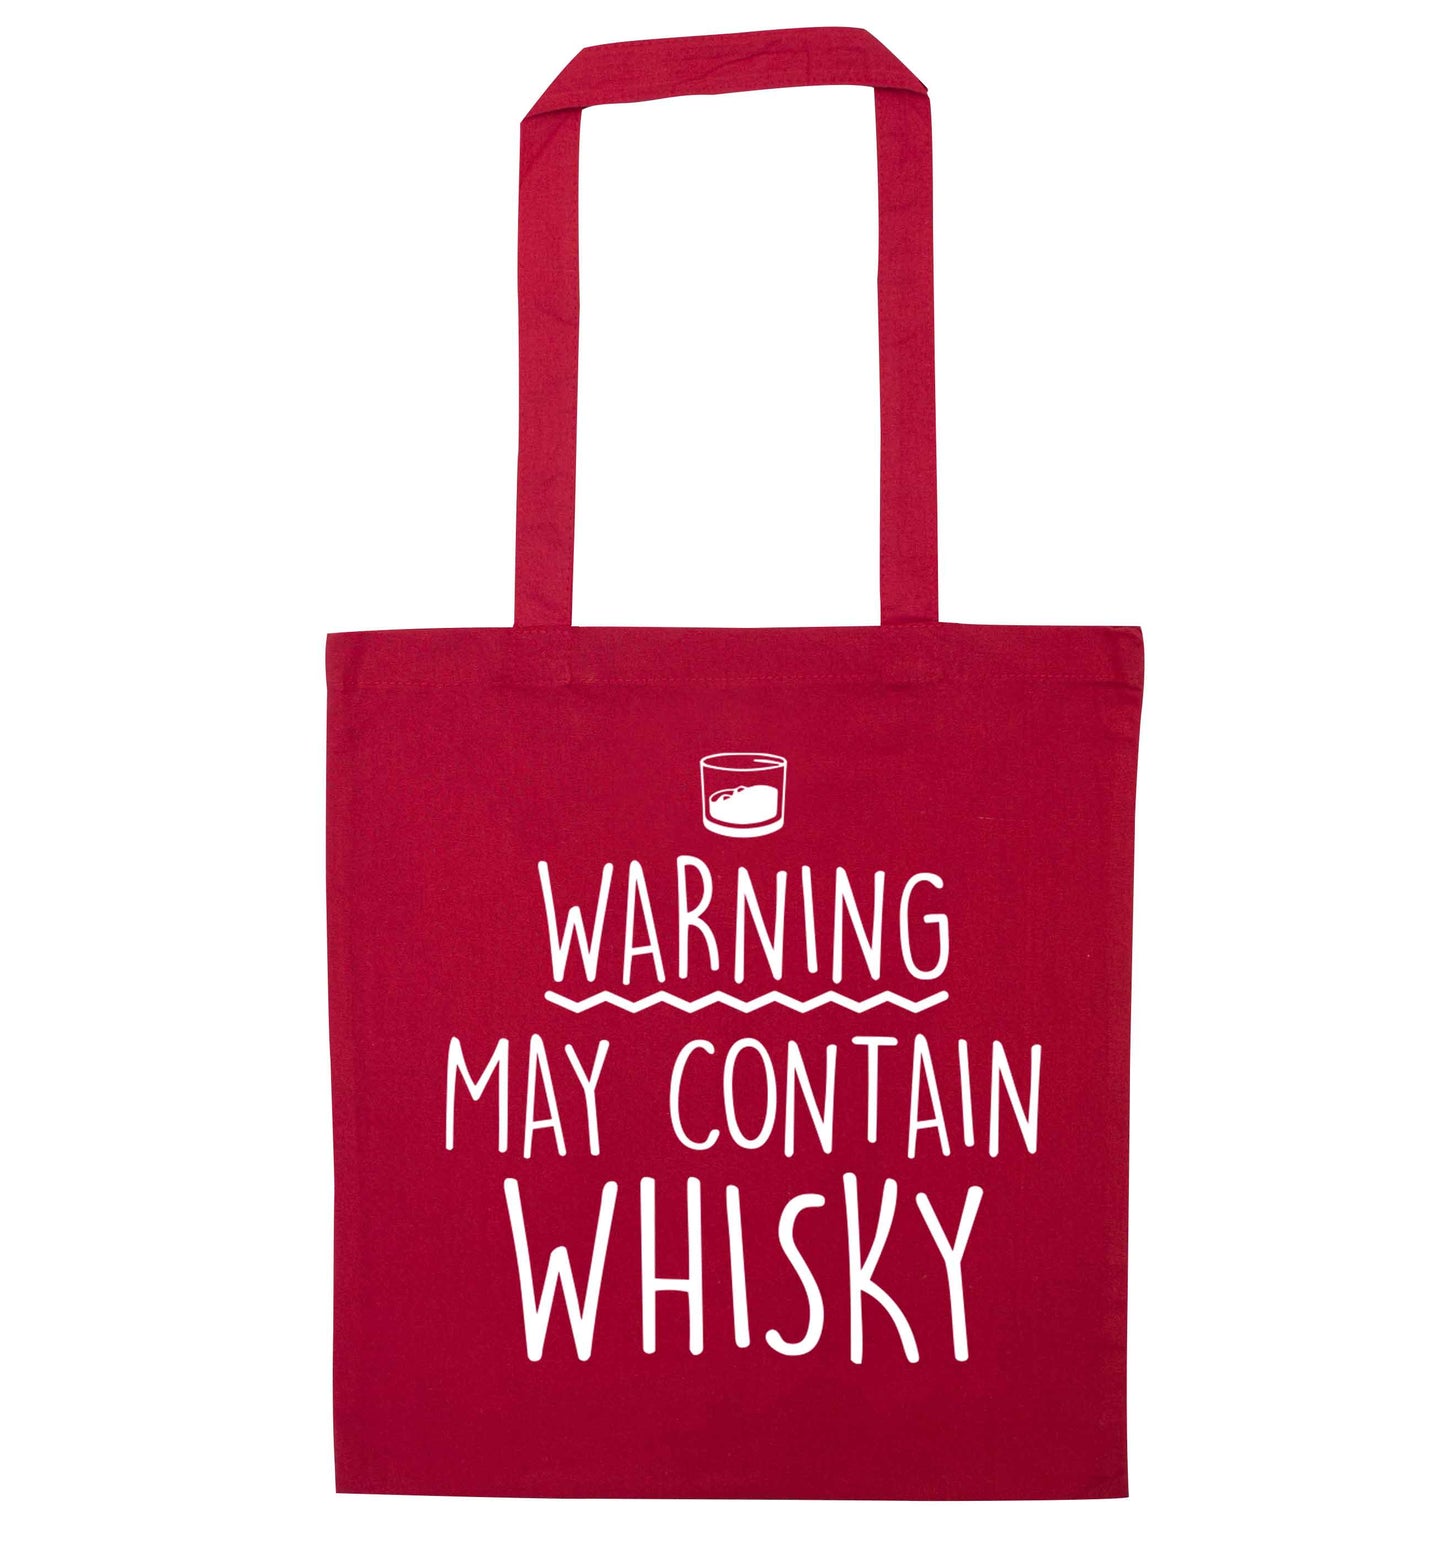 Warning may contain whisky red tote bag